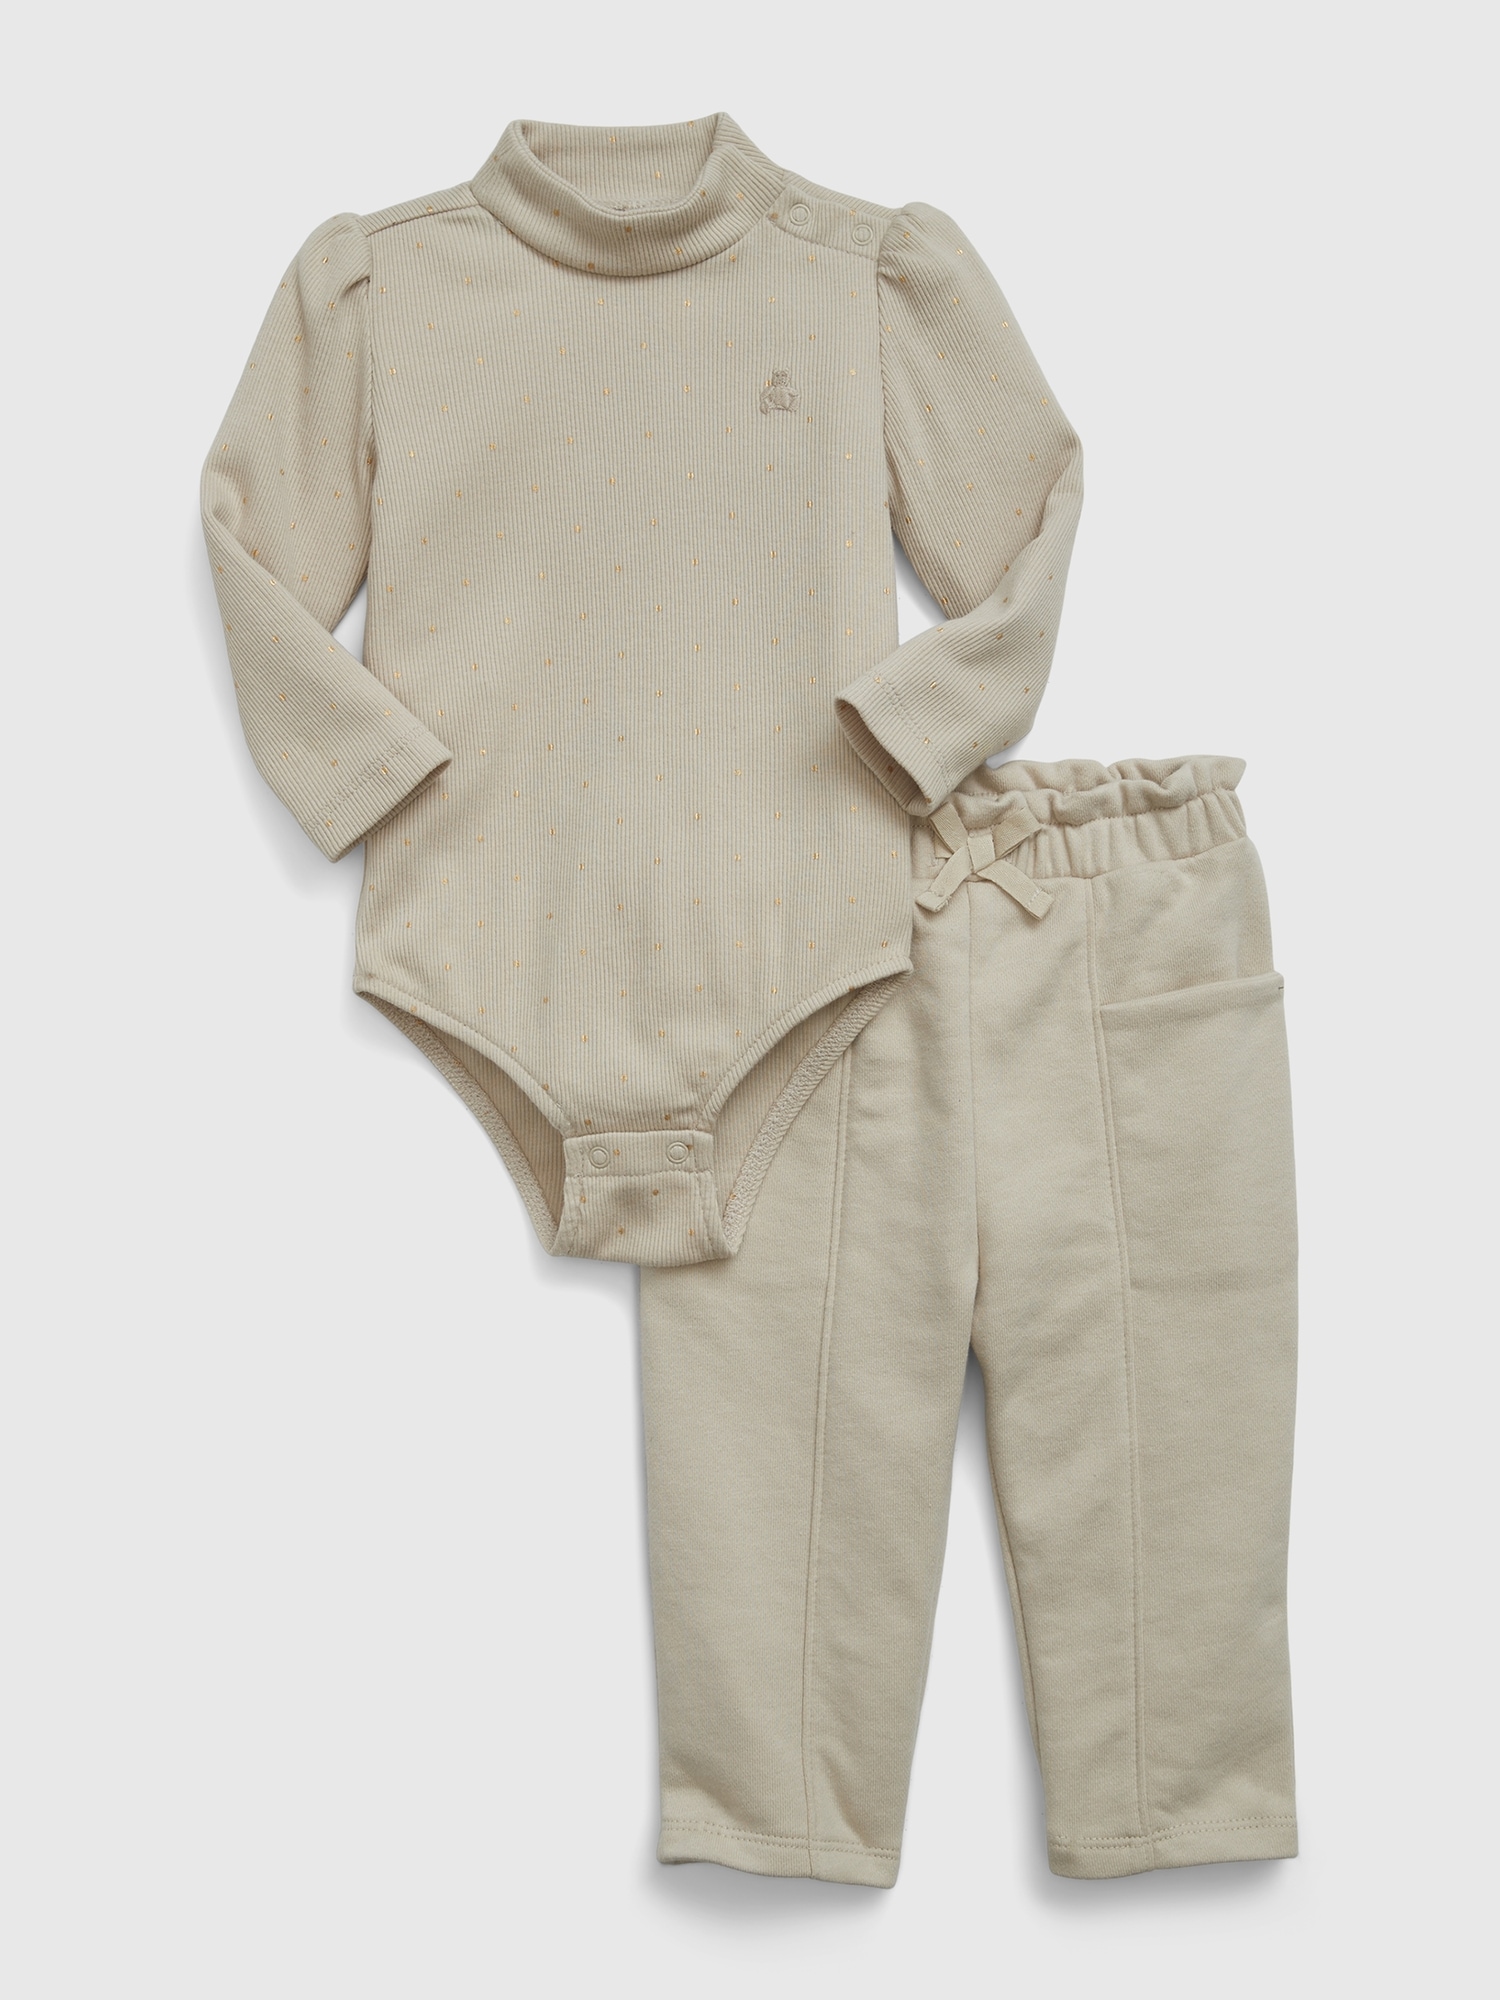 Gap Baby Bodysuit Outfit Set